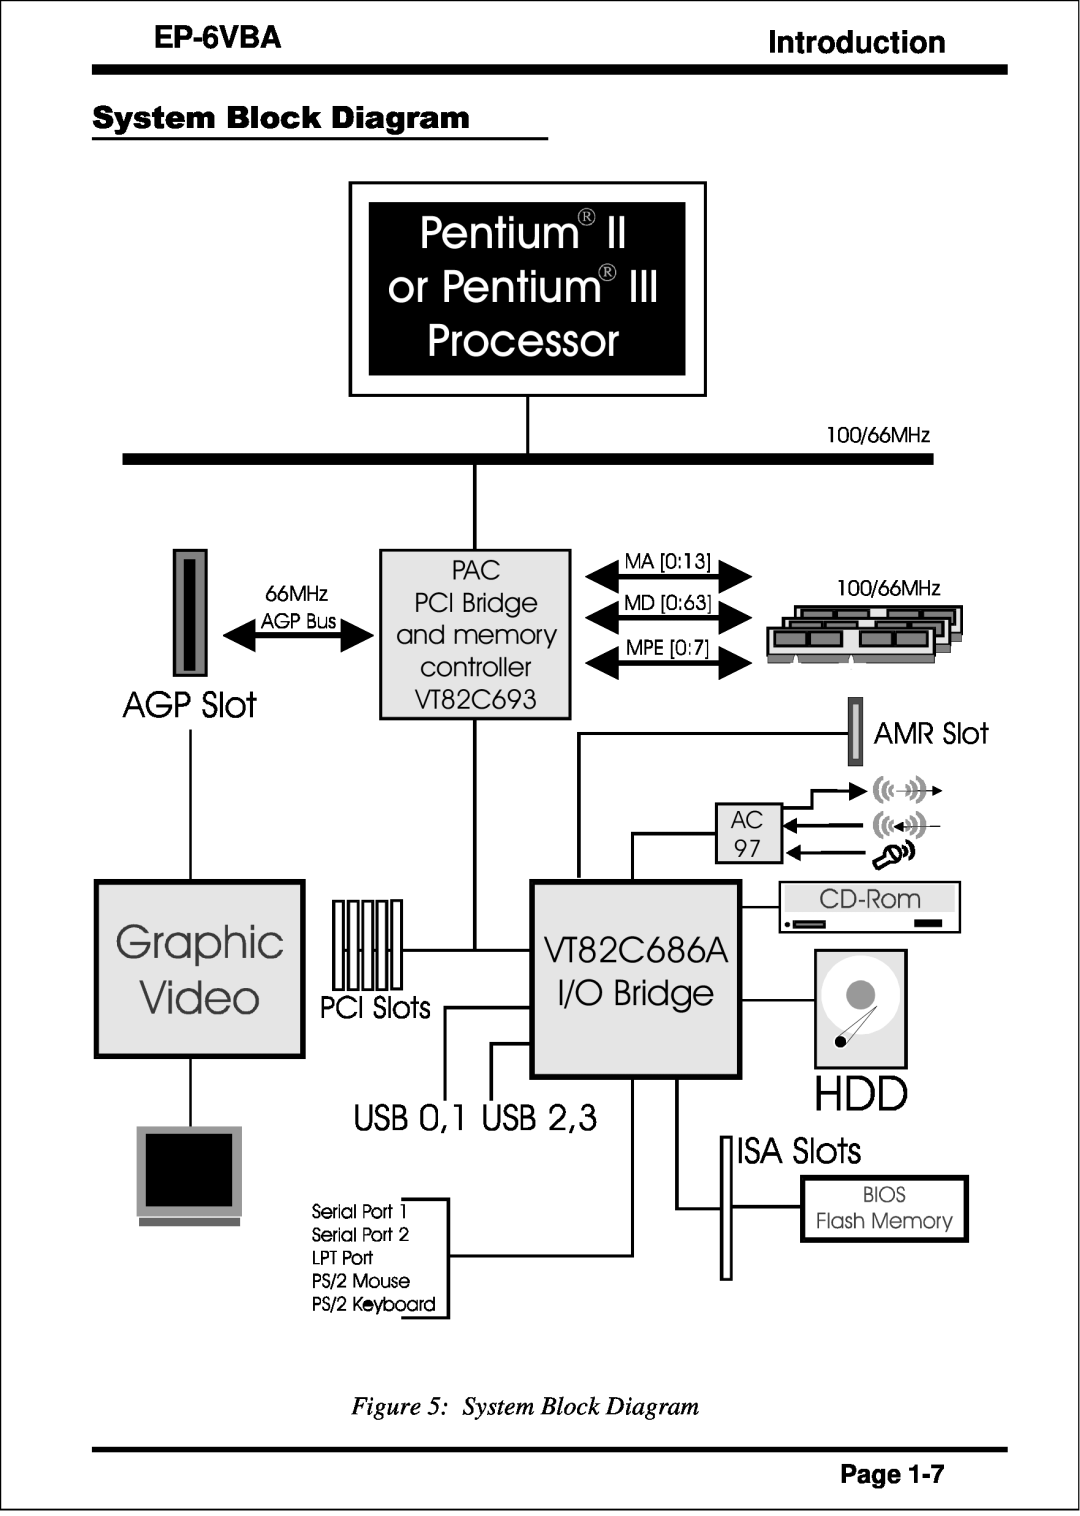 EPoX Computer EP-6VBA or Pentium, Processor, I/O Bridge, VT82C686A, USB 0,1 USB 2,3, Introduction, and memory, Page 